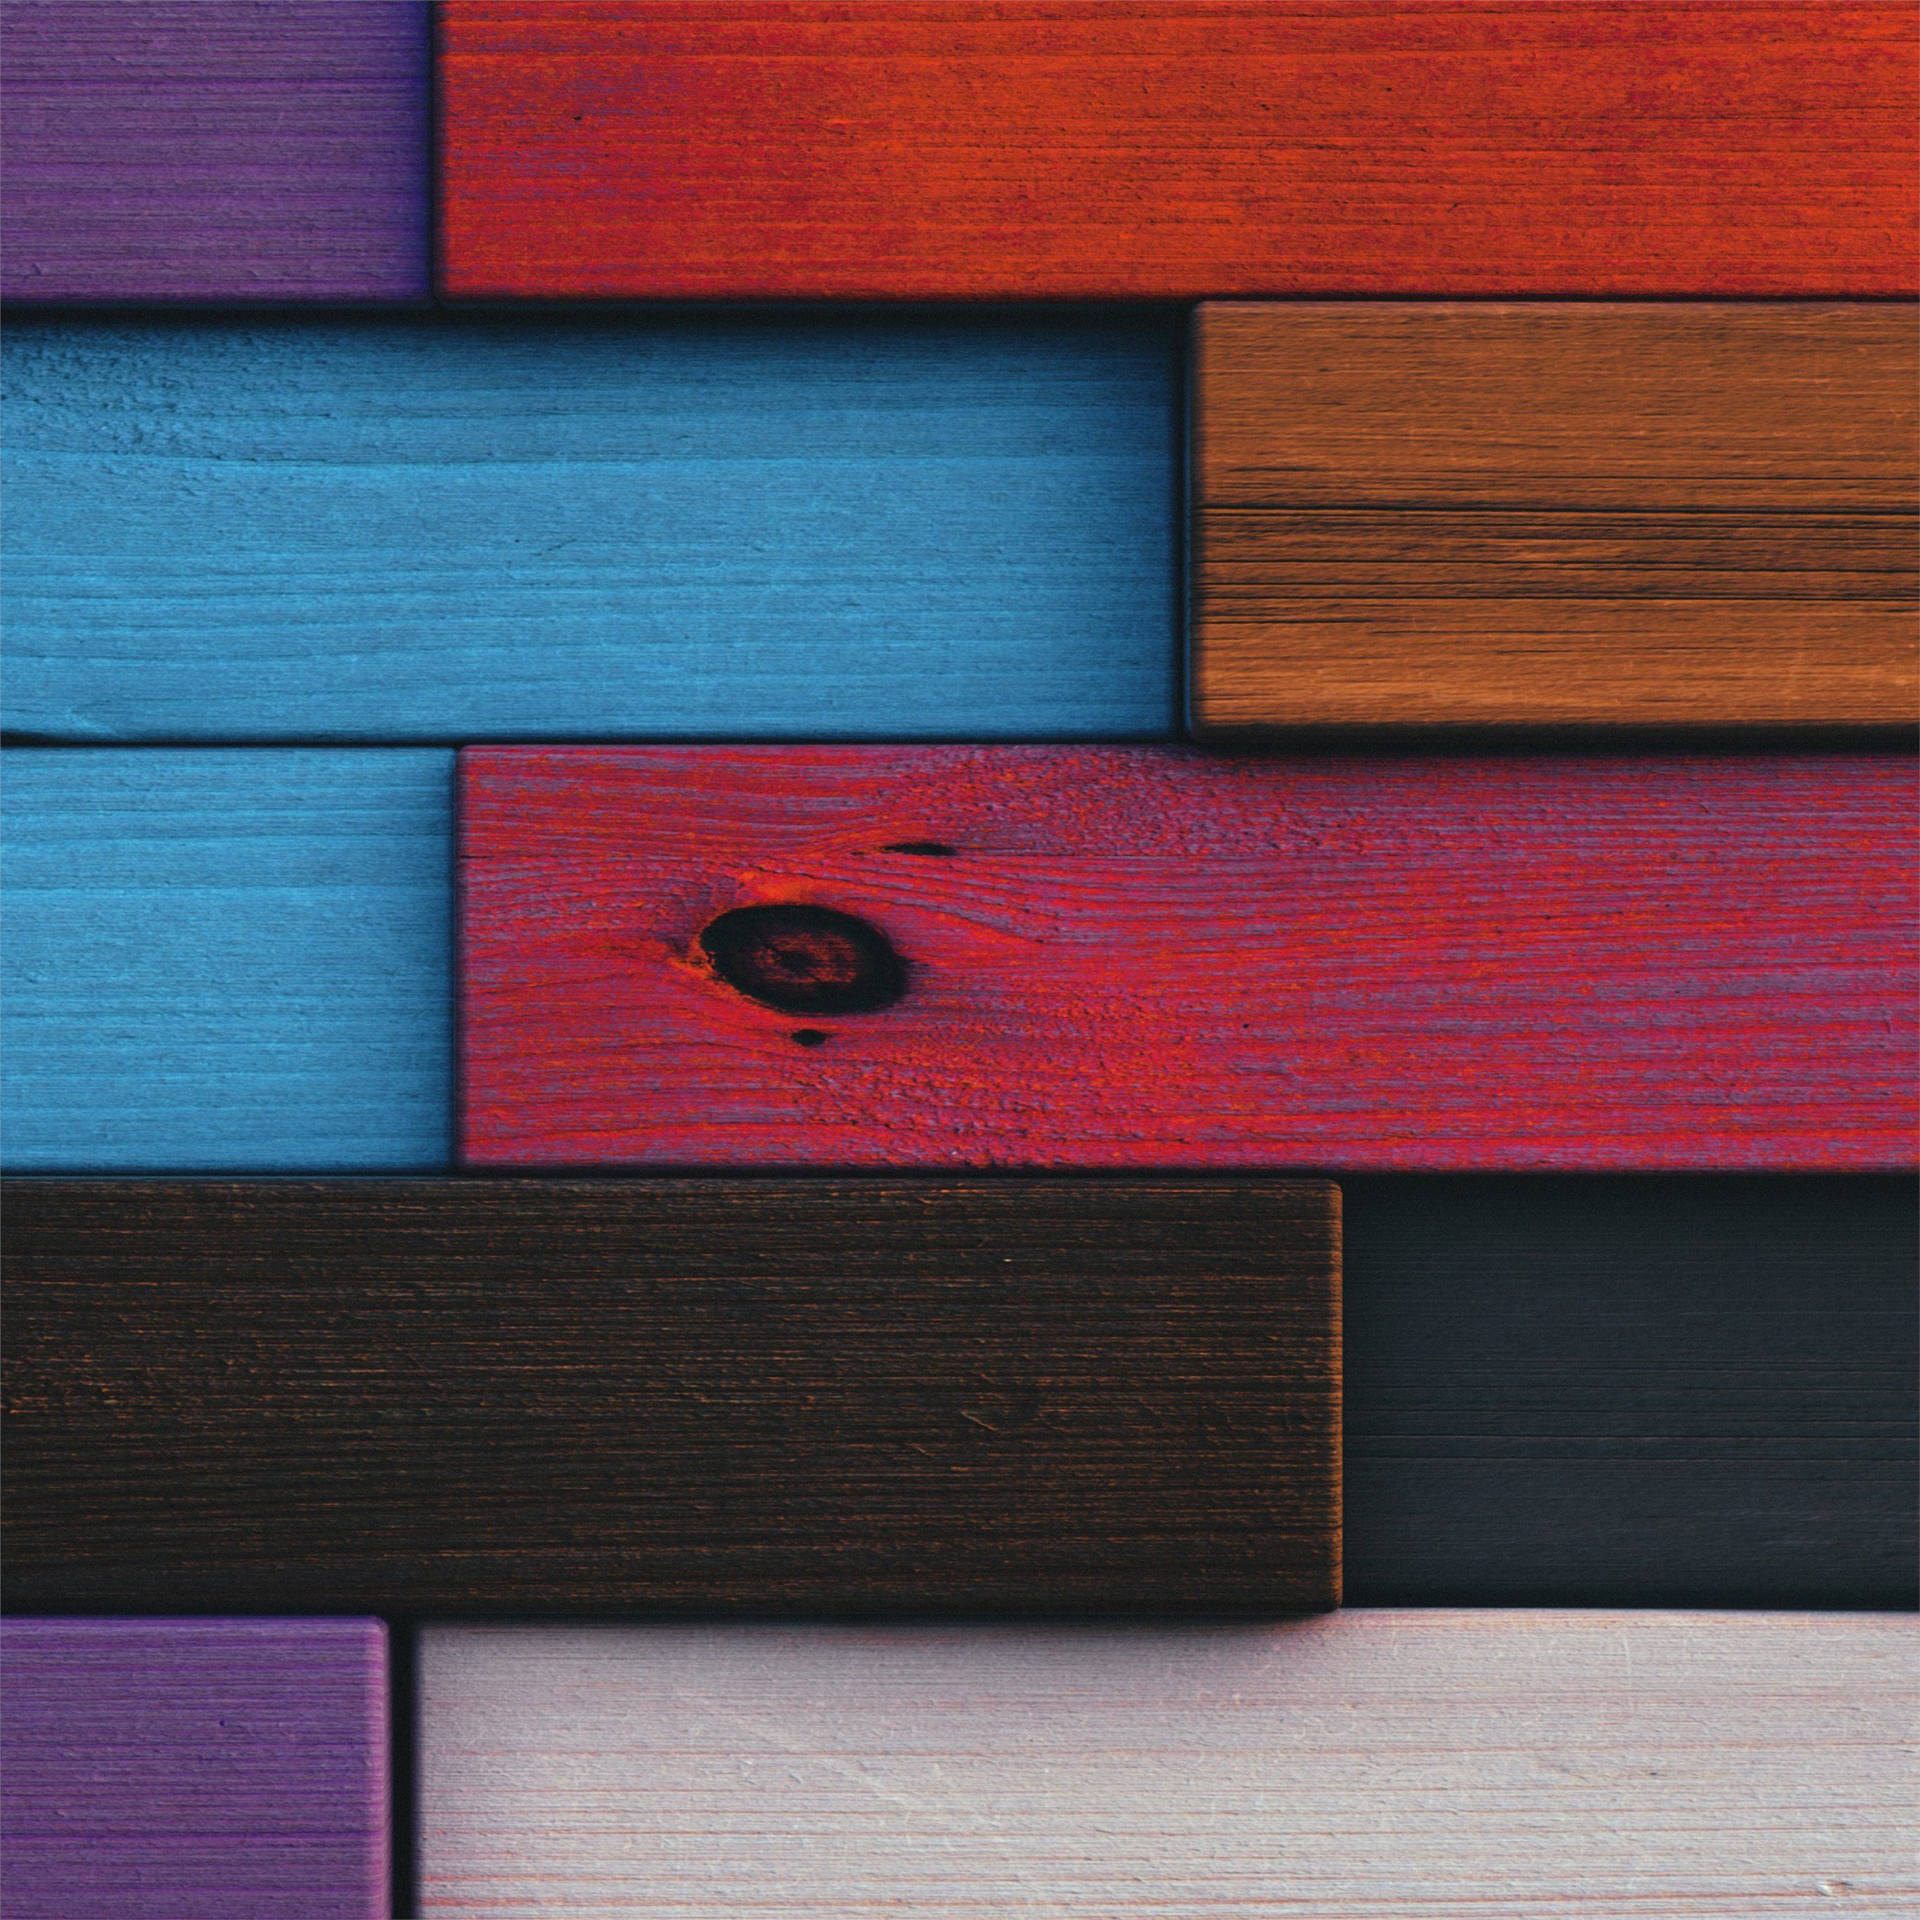 Ipad Pro 12.9 Multi-color Wood Panels Background